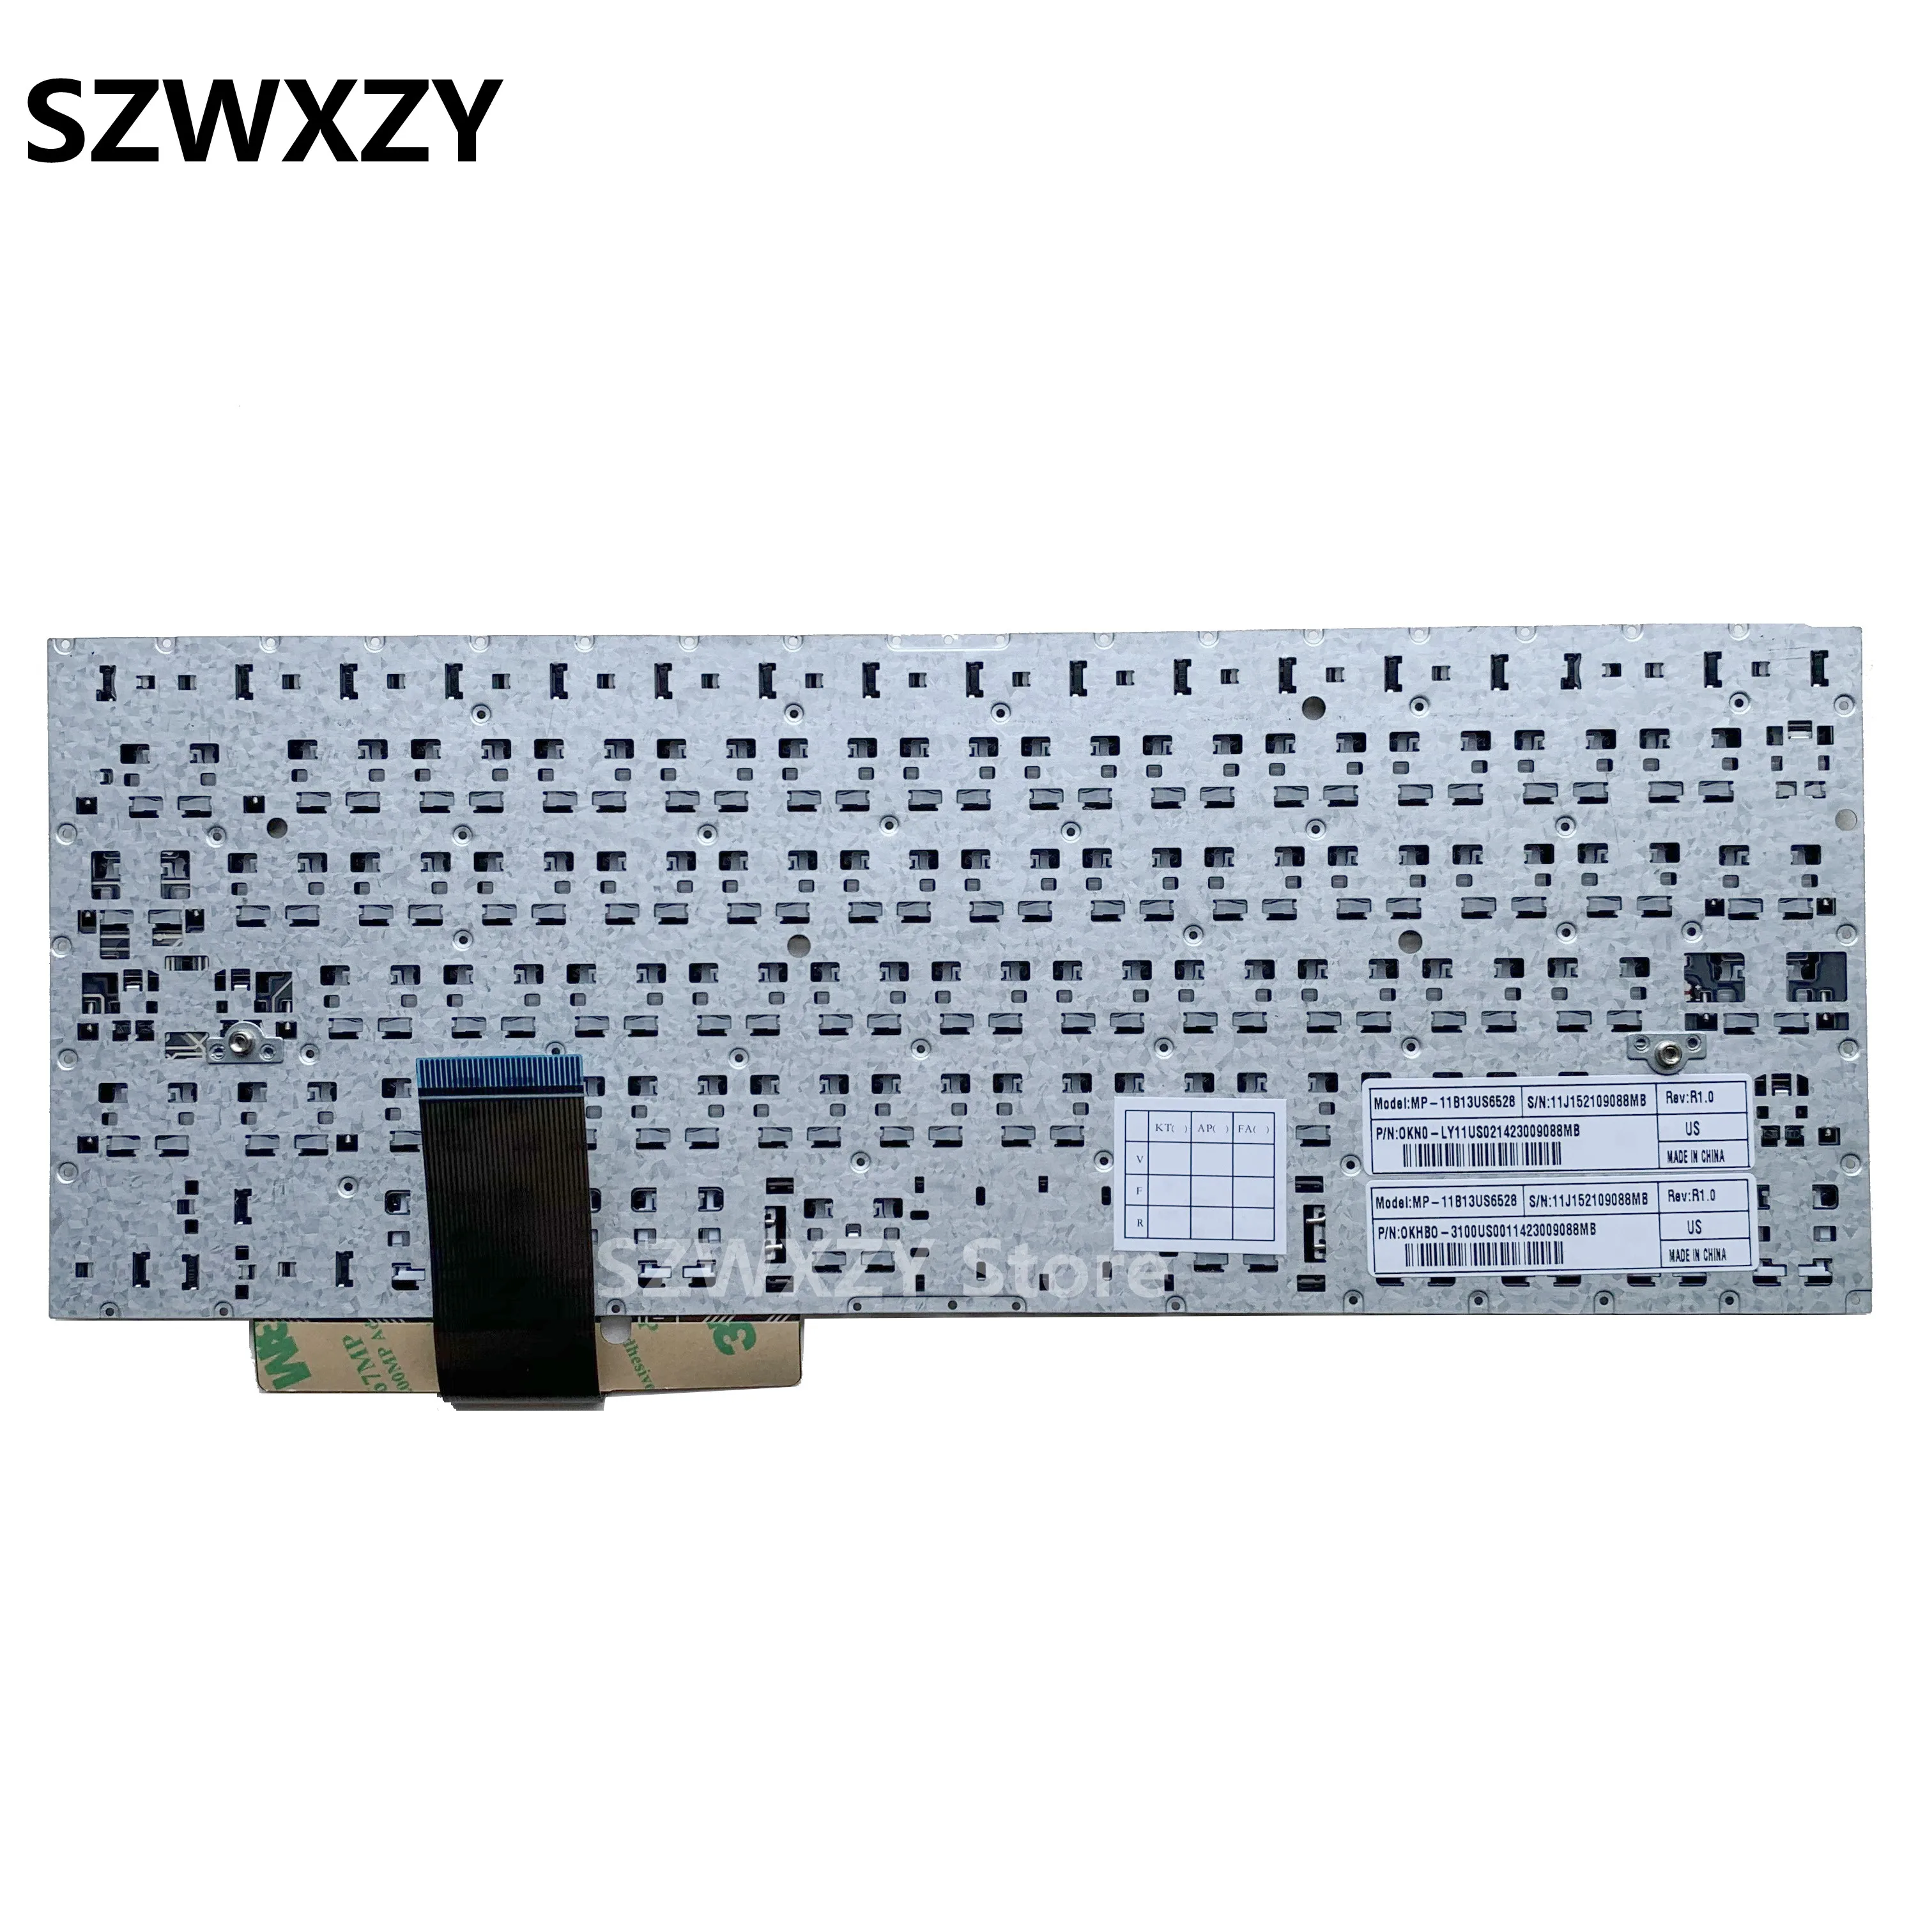 US English MP-11B13US6528 Keyboard for ASUS UX31 UX31E 